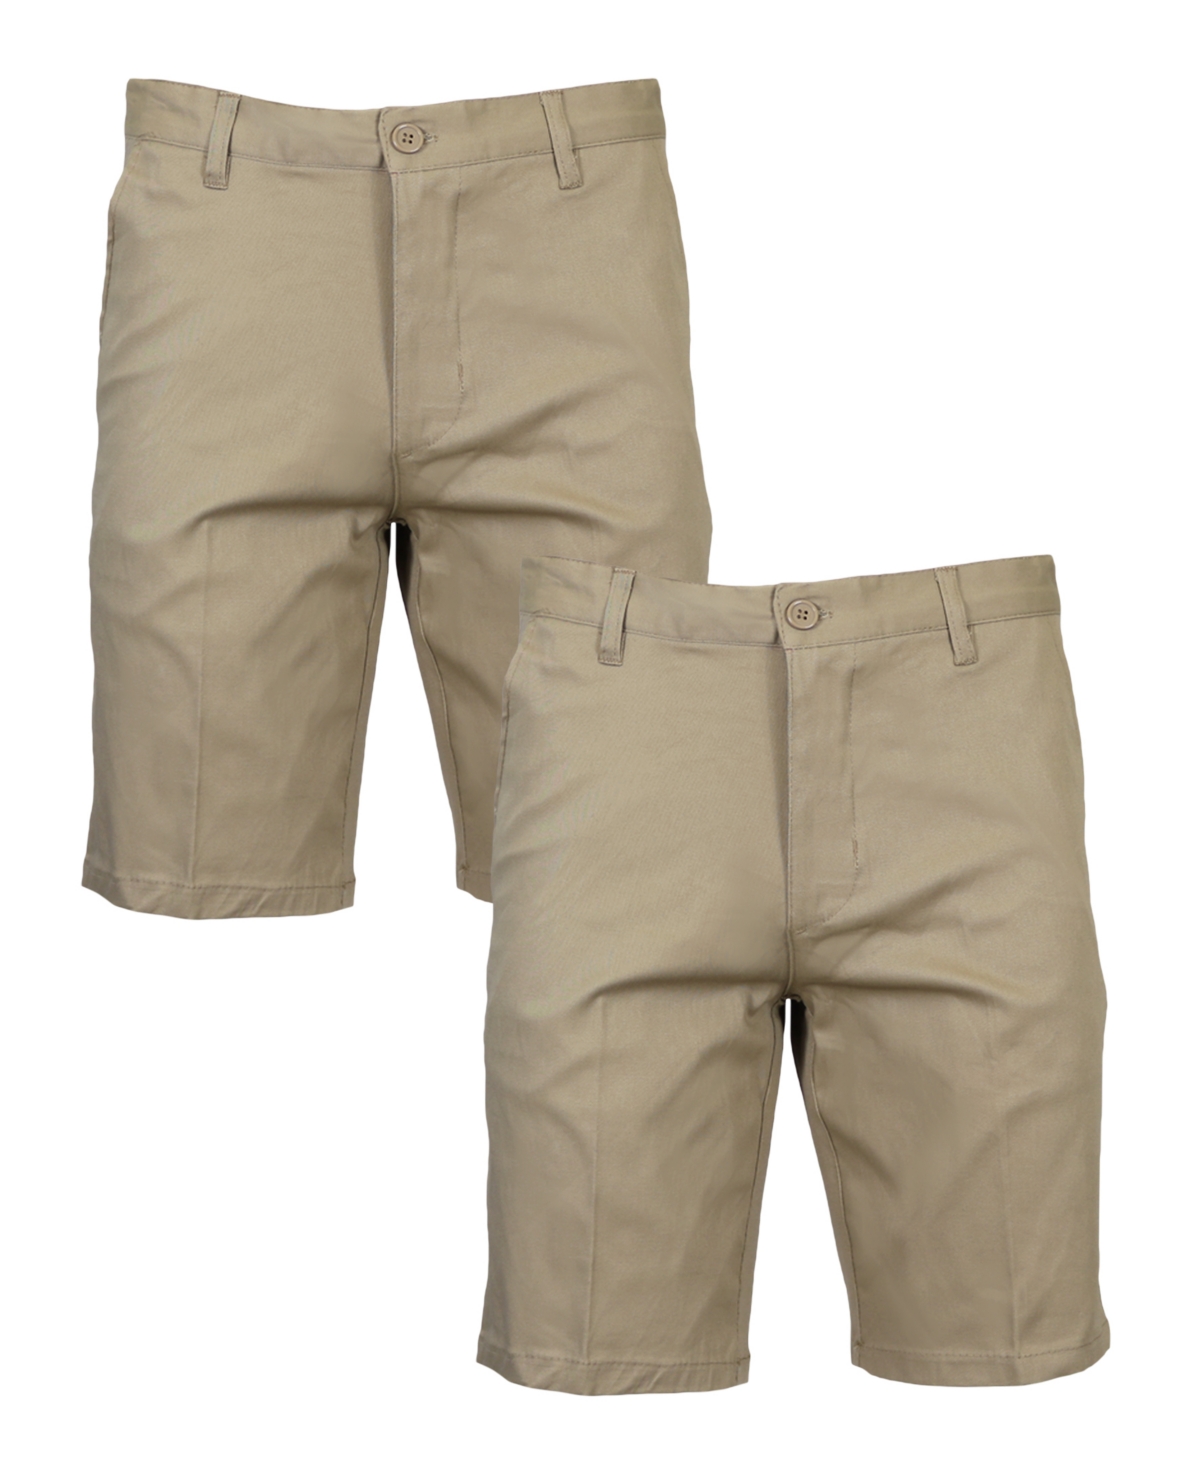 Galaxy By Harvic Men's Slim Fitting Cotton Flex Stretch Chino Shorts, Pack Of 2 In Khaki Khaki